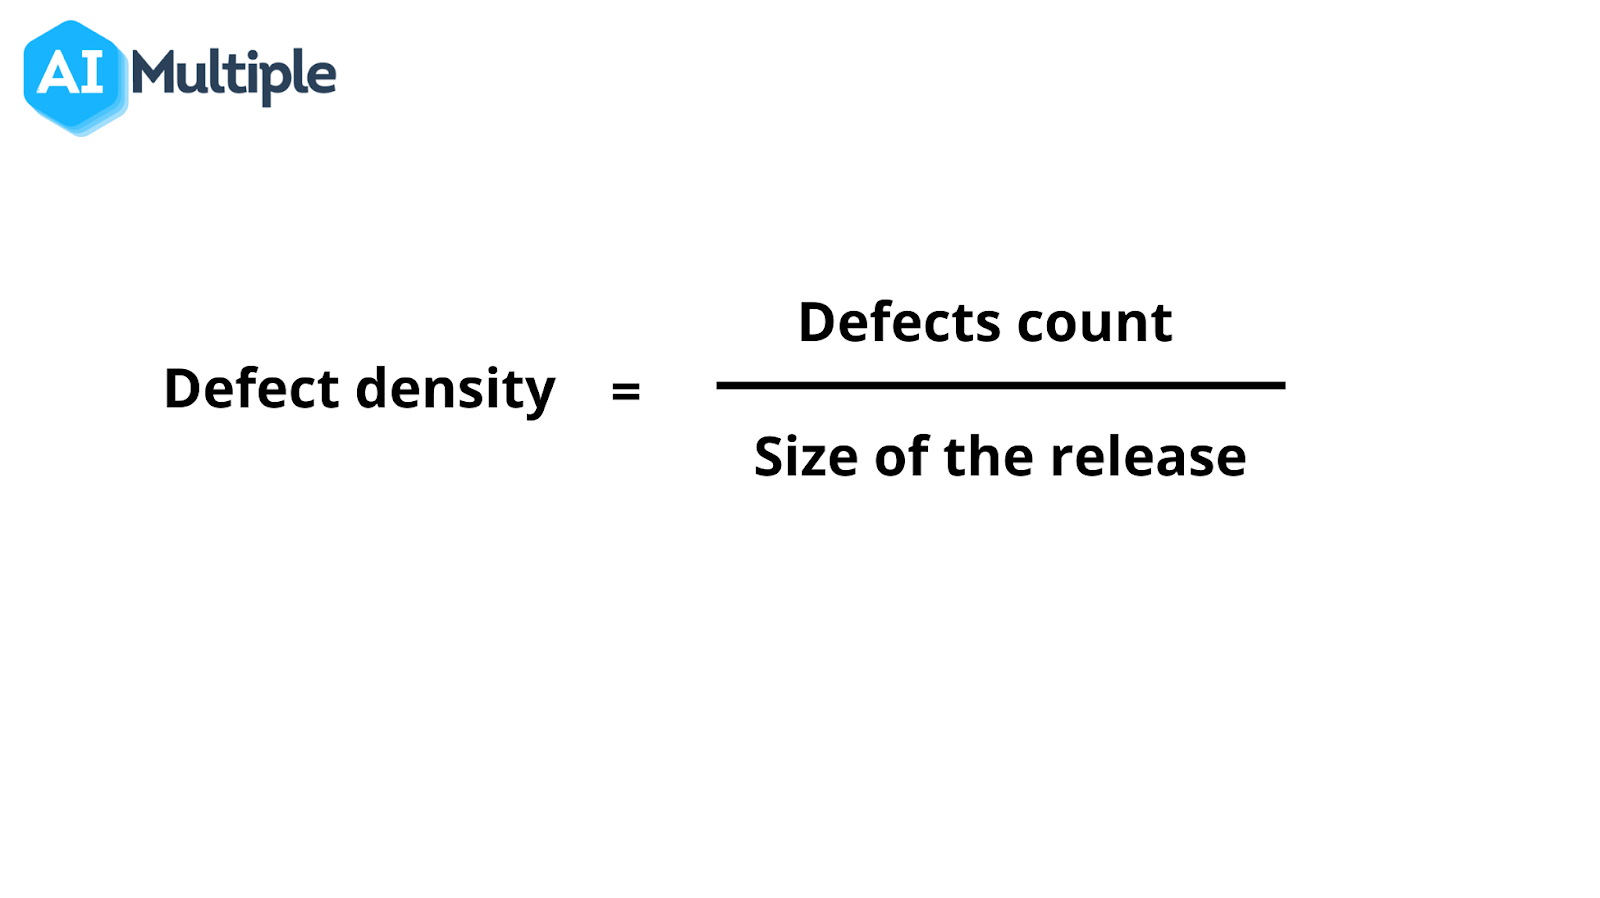 Defect density